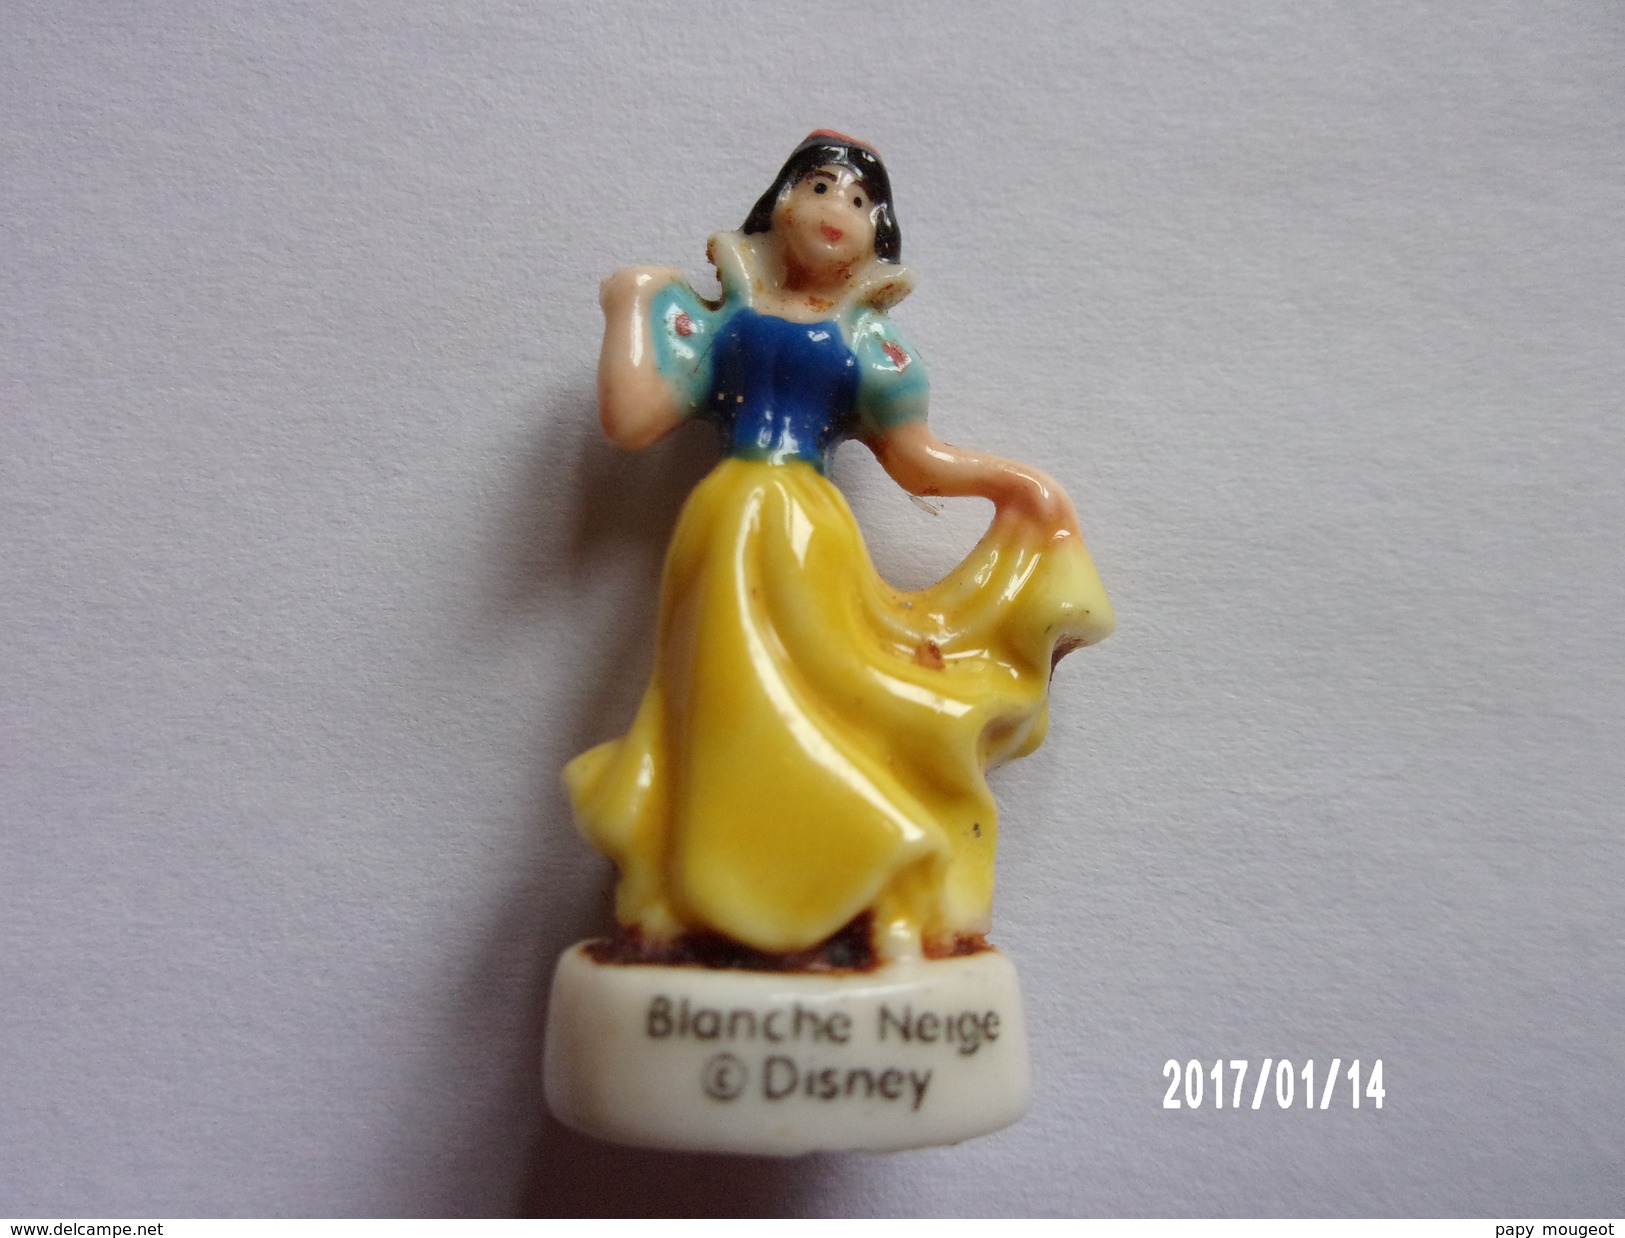 Disney - Blanche Neige 1 - Disney